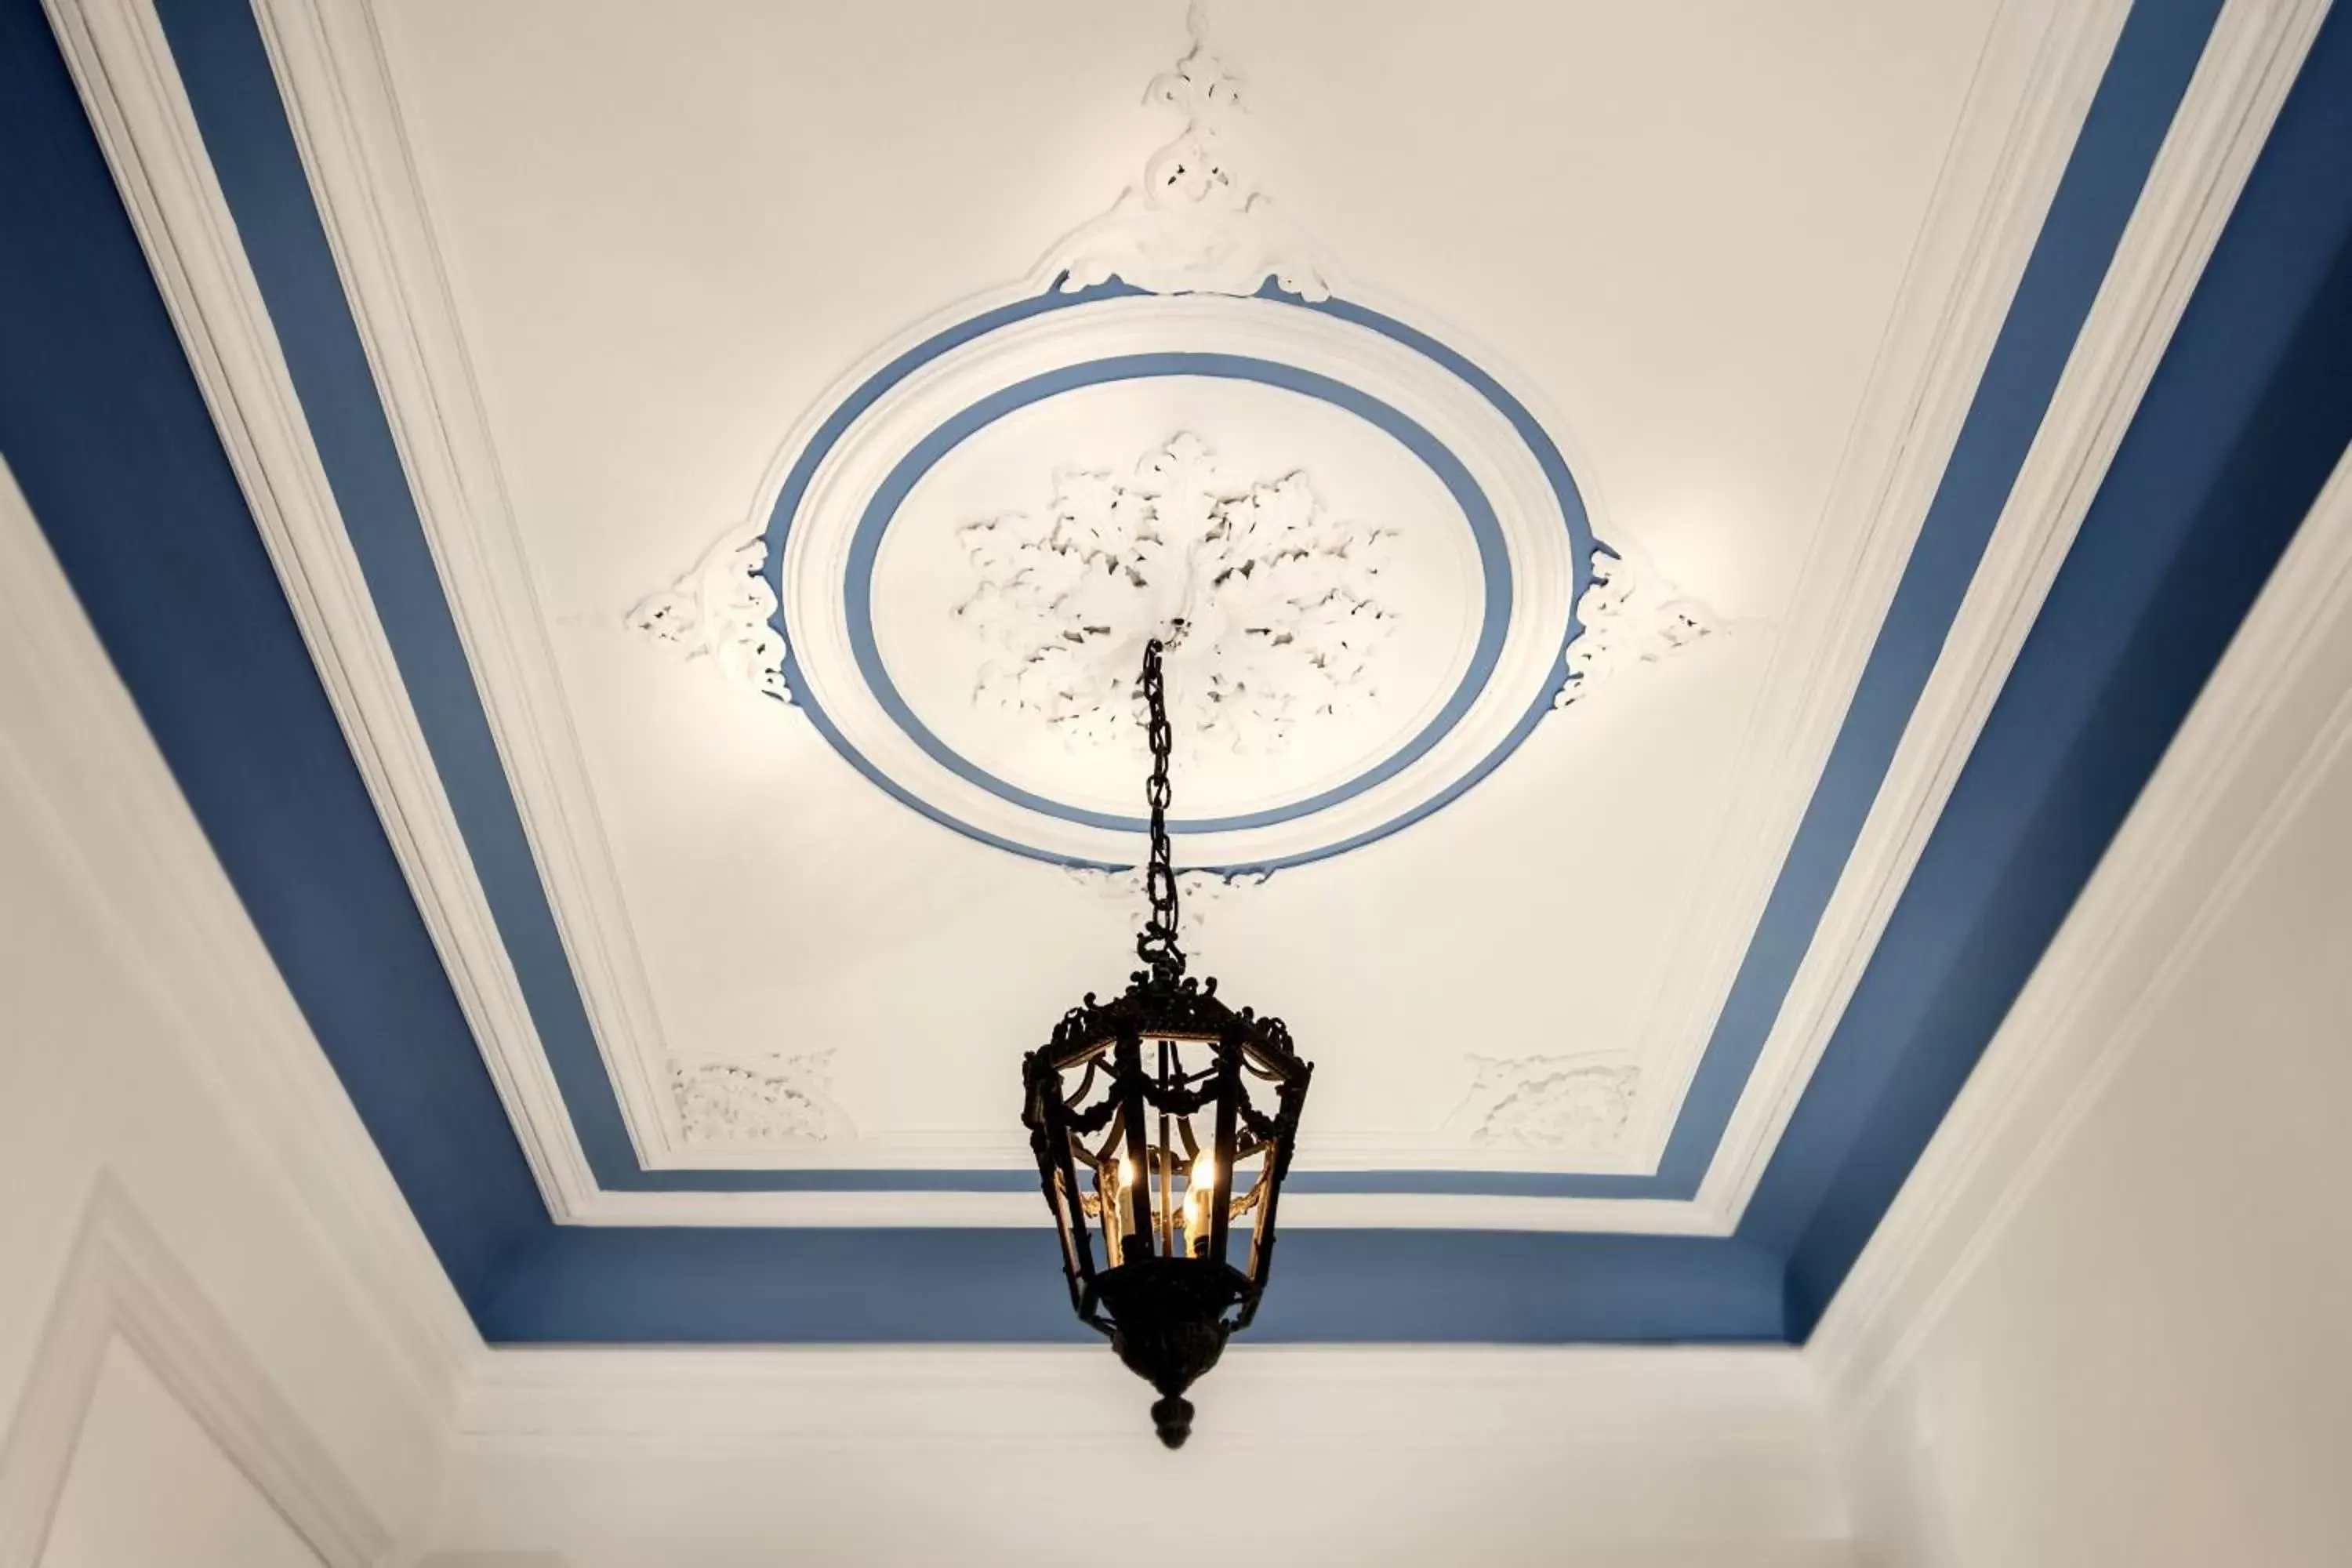 Decorative detail in Casa do Principe